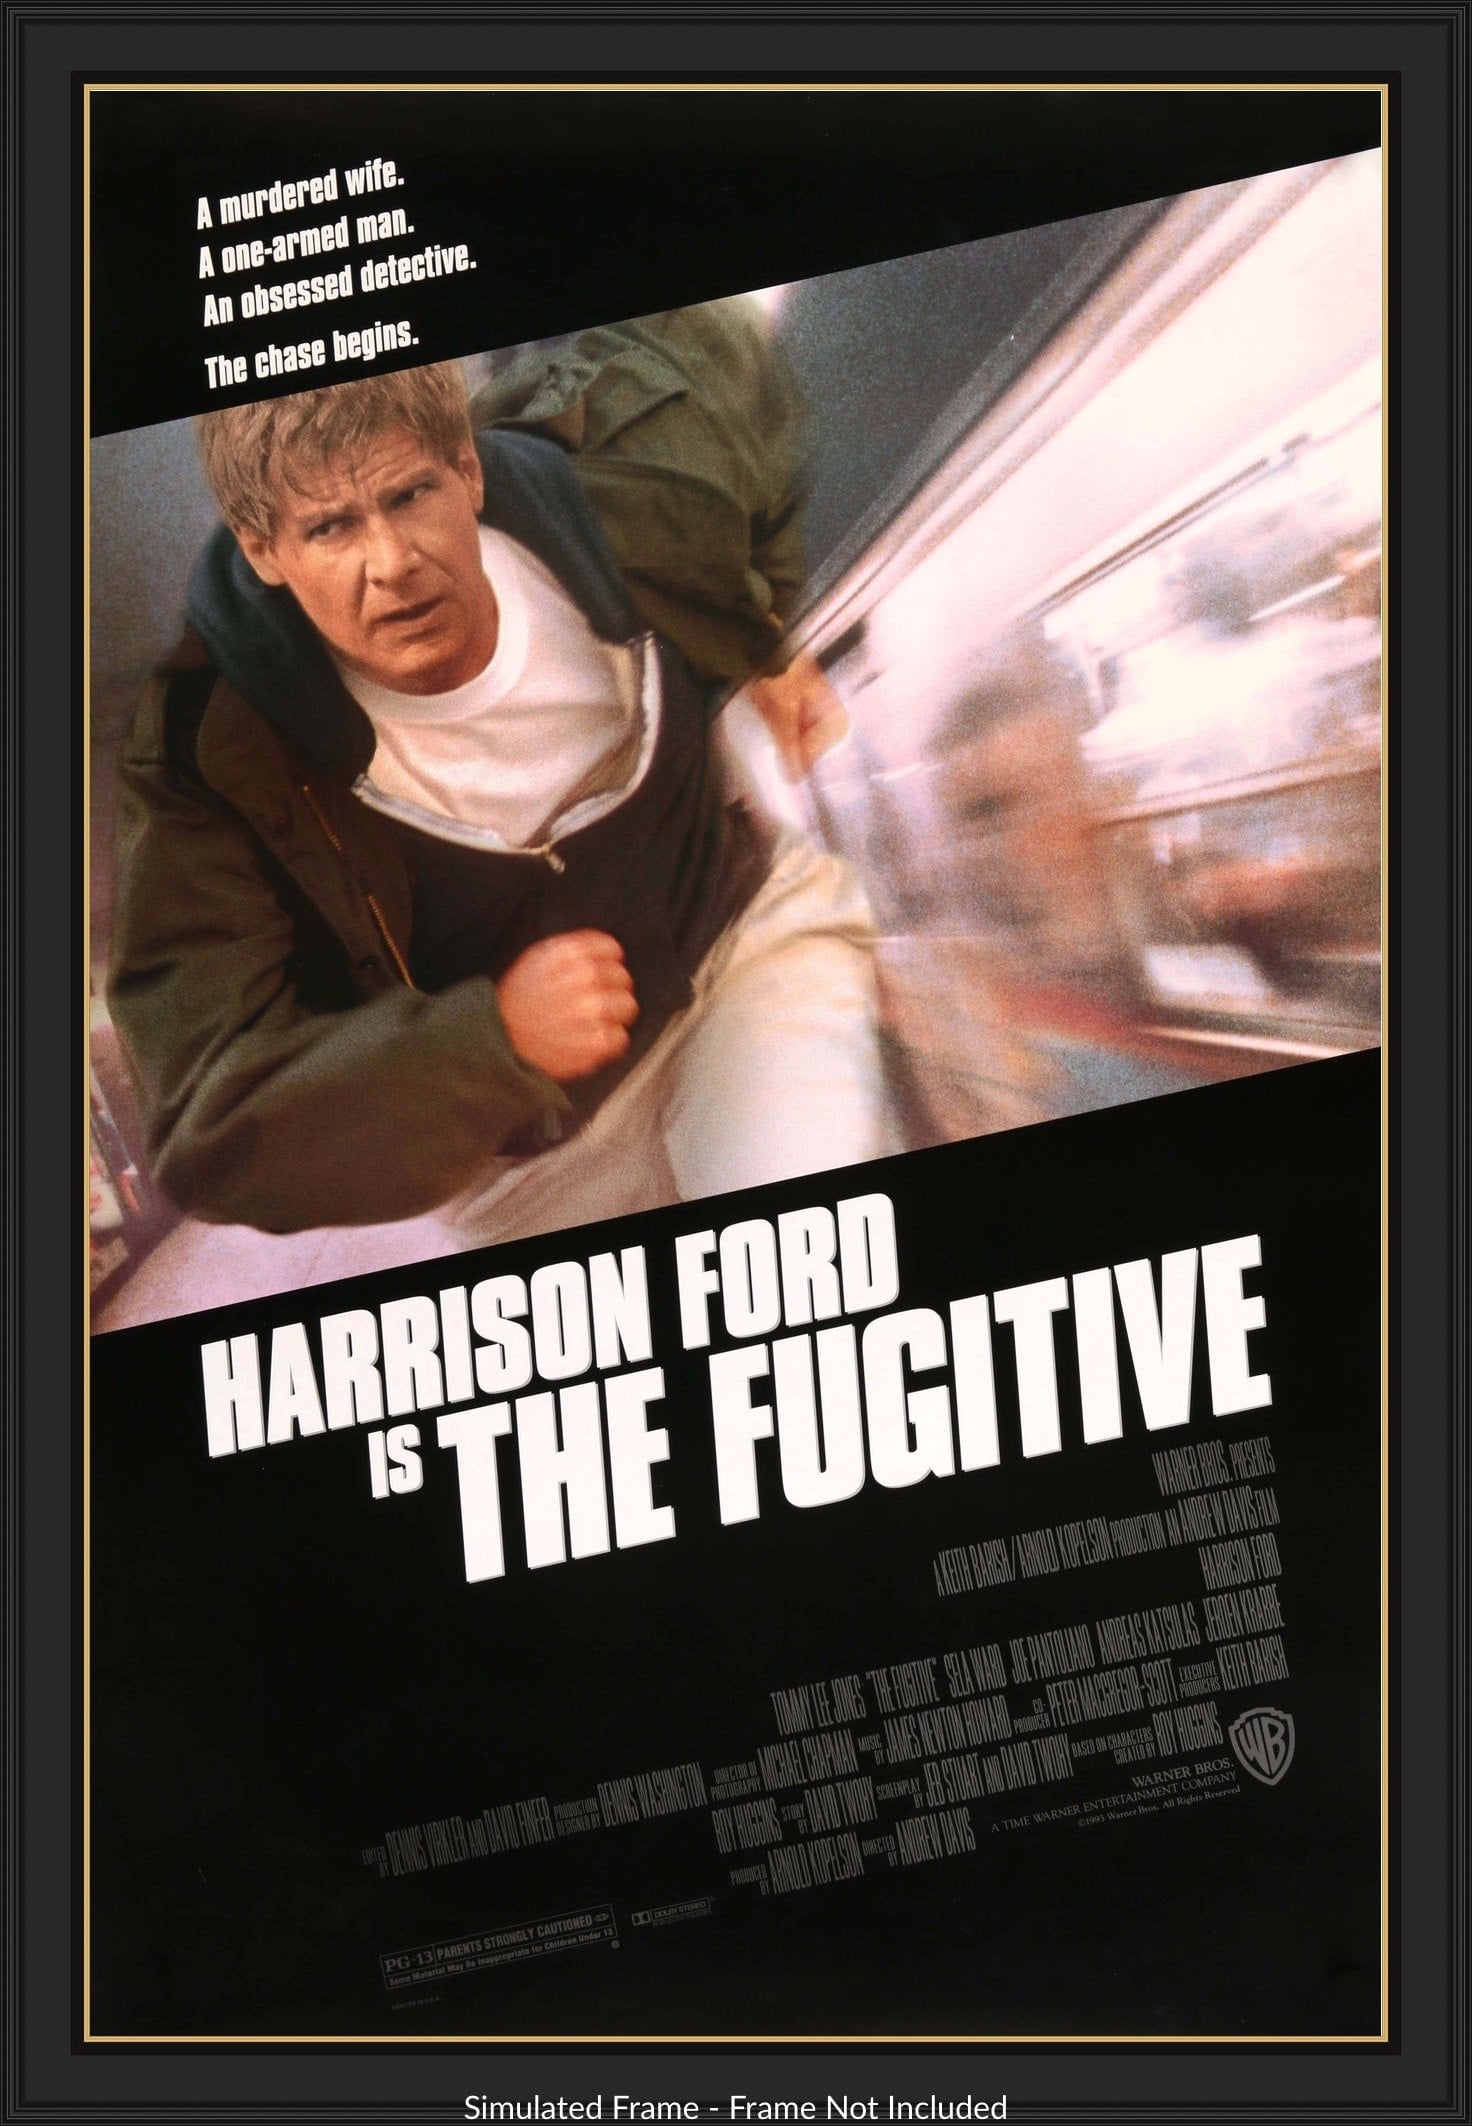 Fugitive (1993) original movie poster for sale at Original Film Art